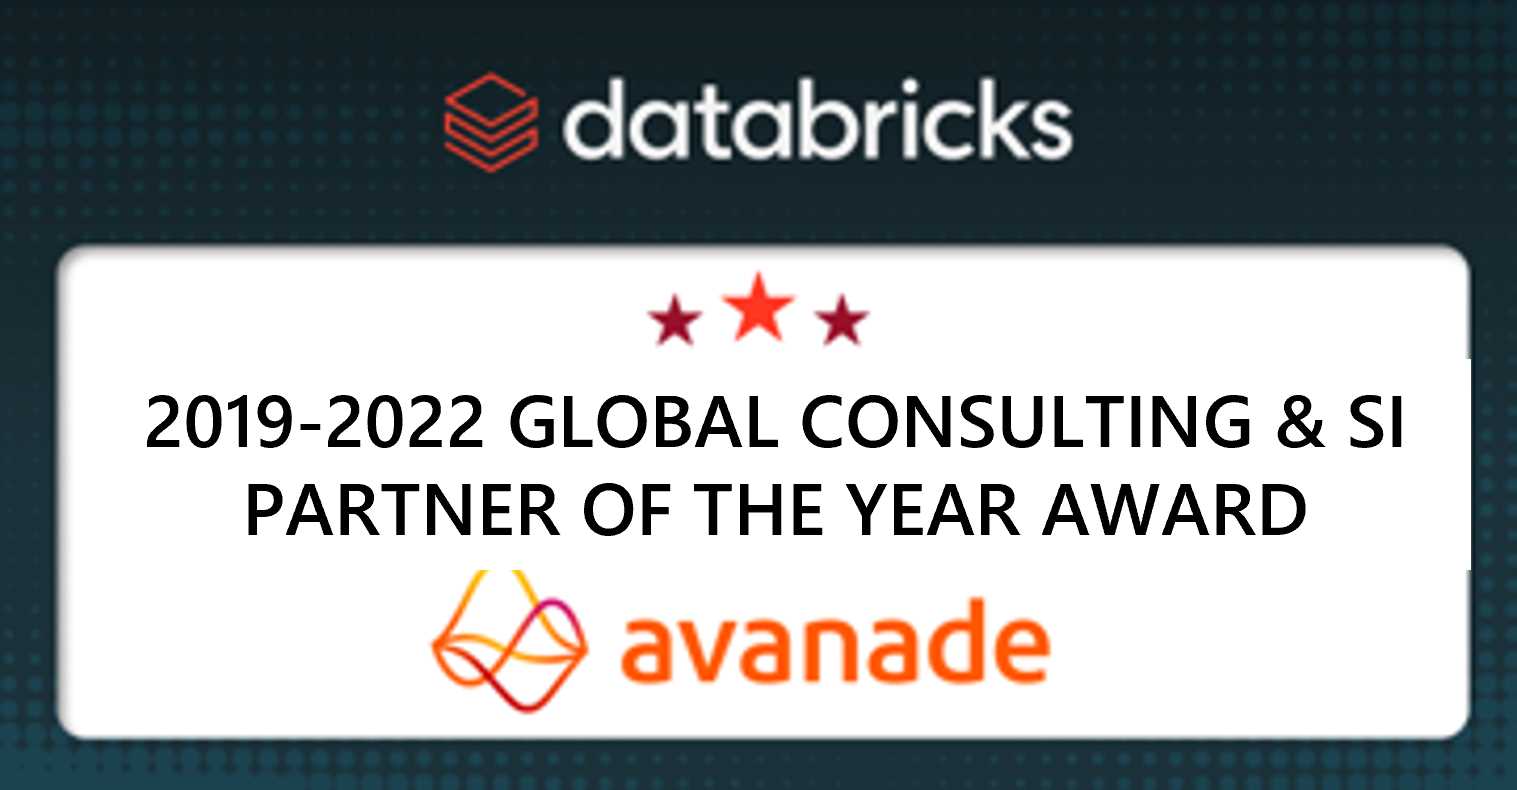 Avanade and Databricks partnership